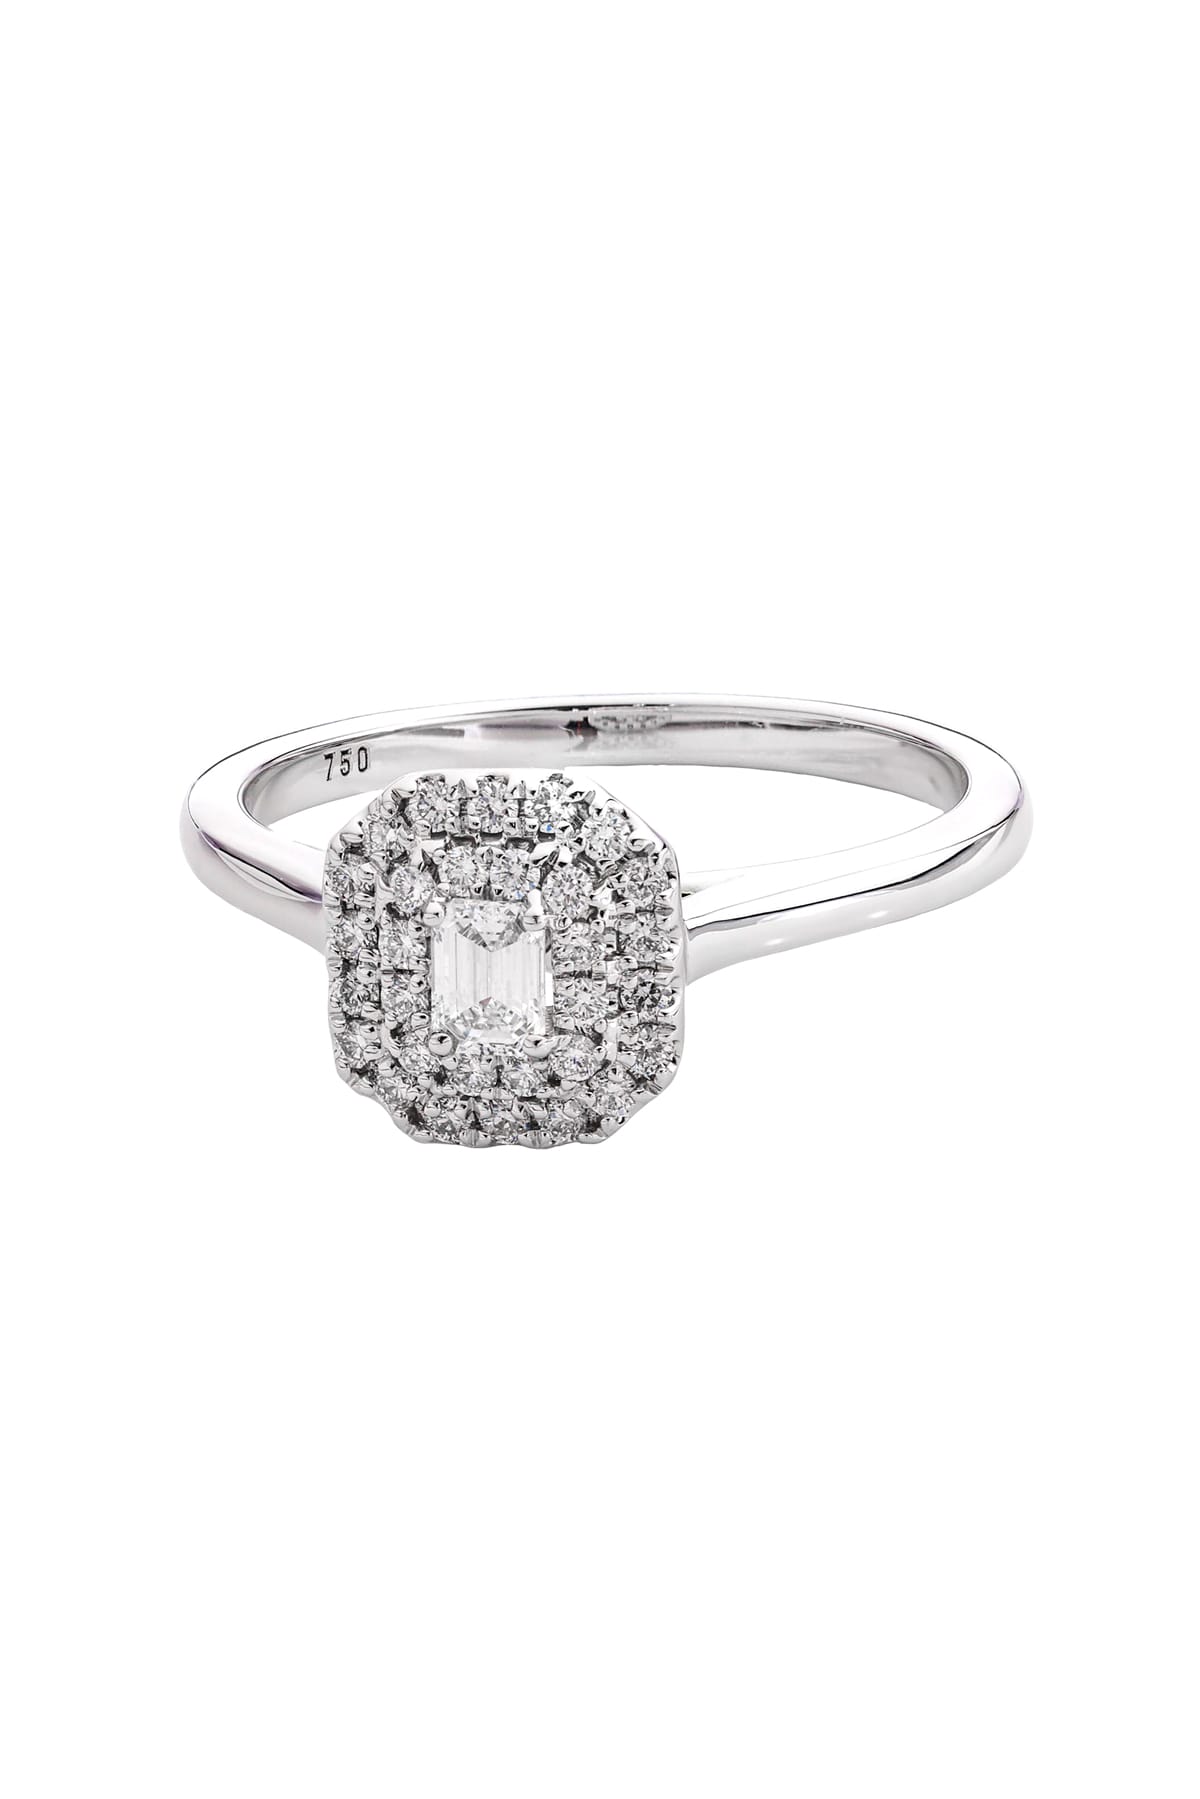 18 Carat Gold Emerald Cut Double Halo Diamond Engagement Ring available at LeGassick Diamonds and Jewellery Gold Coast, Australia.